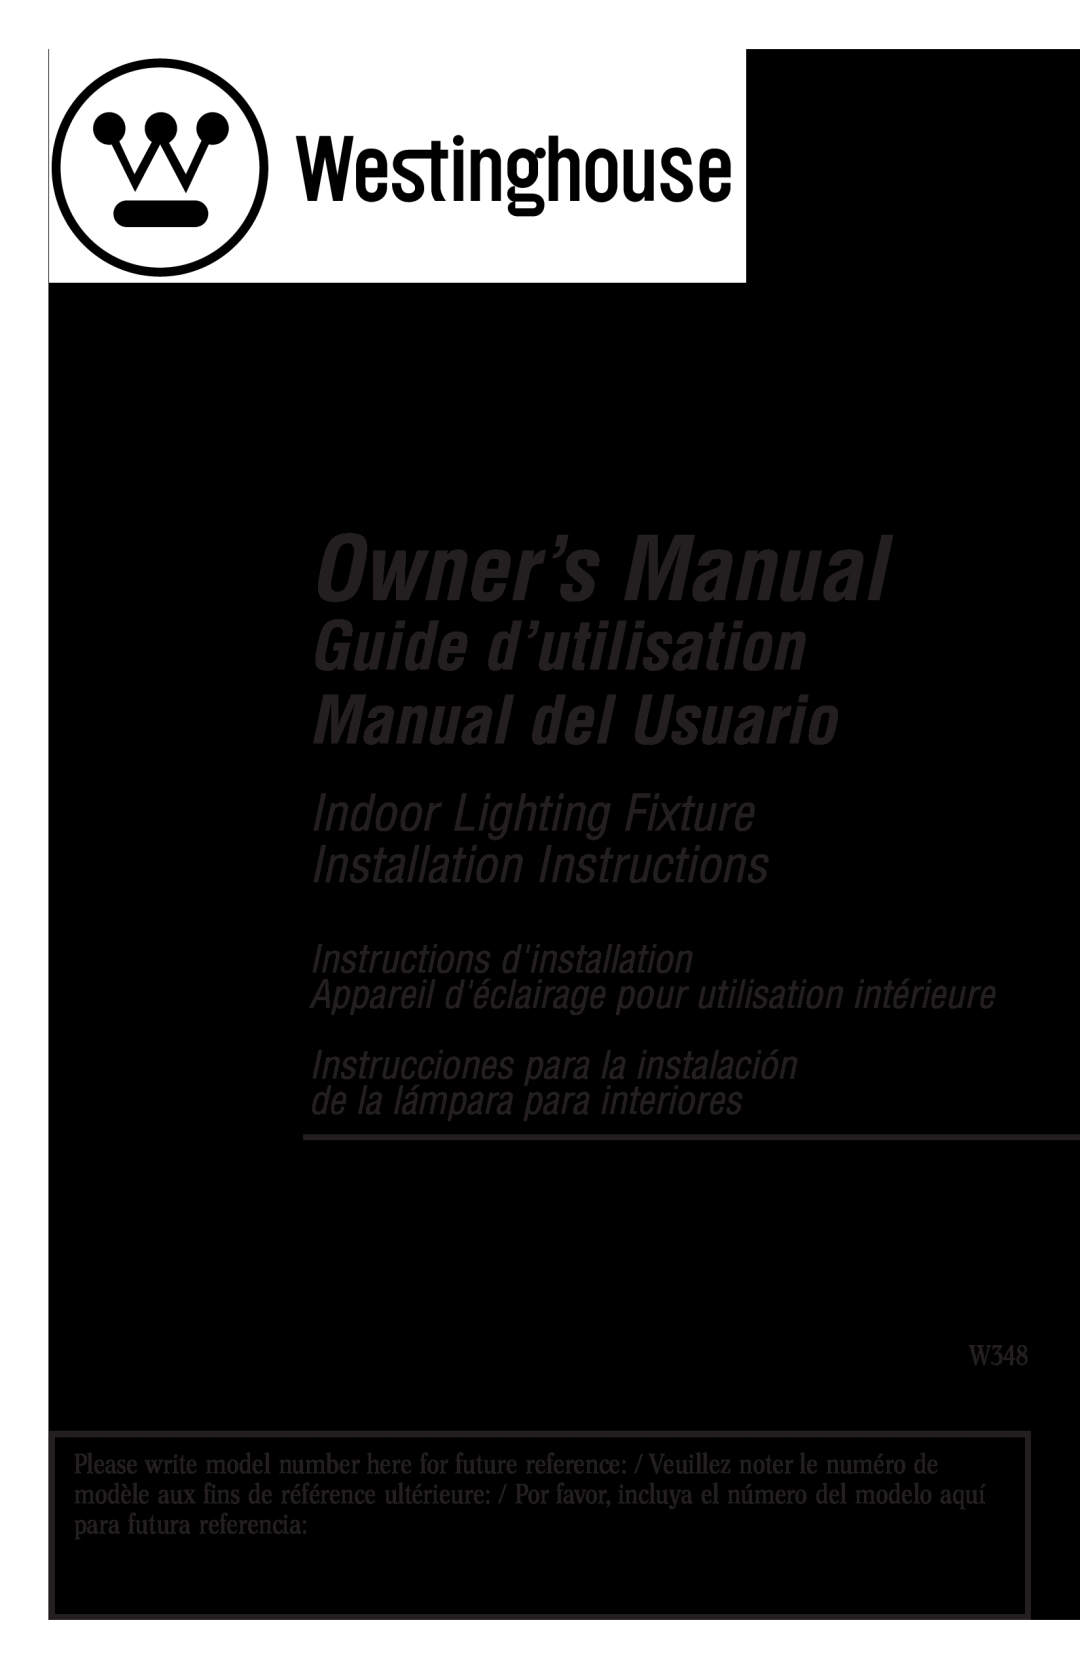 Westinghouse W348 owner manual Guide d’utilisation Manual del Usuario, Indoor Lighting Fixture Installation Instructions 